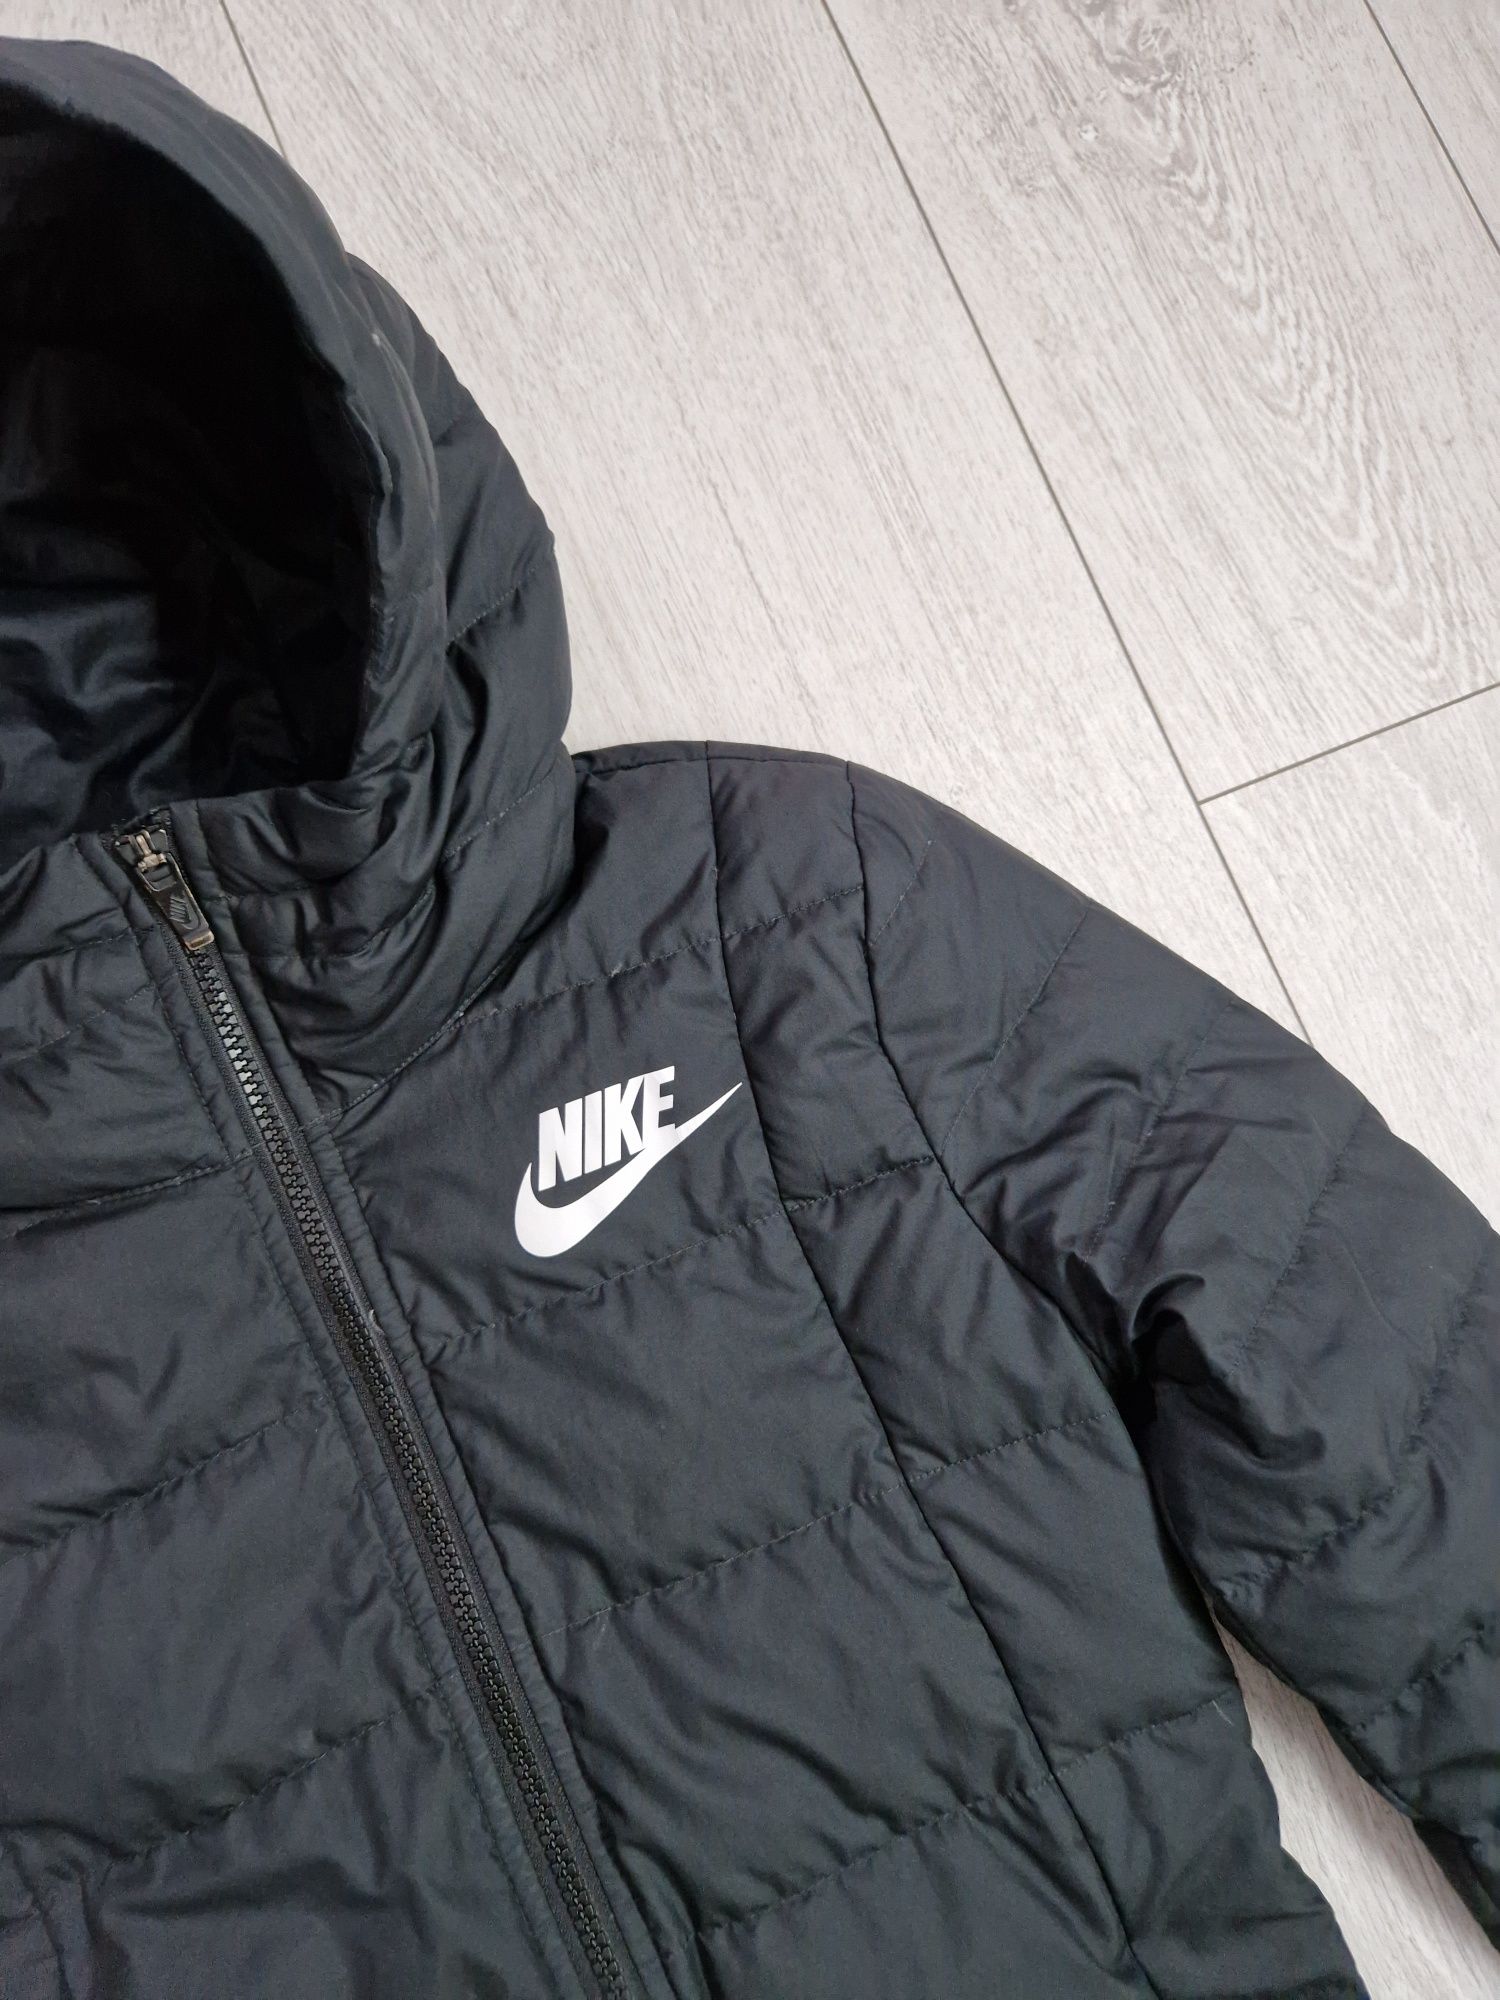 Nike kurtka pikowana puchowa bomberka